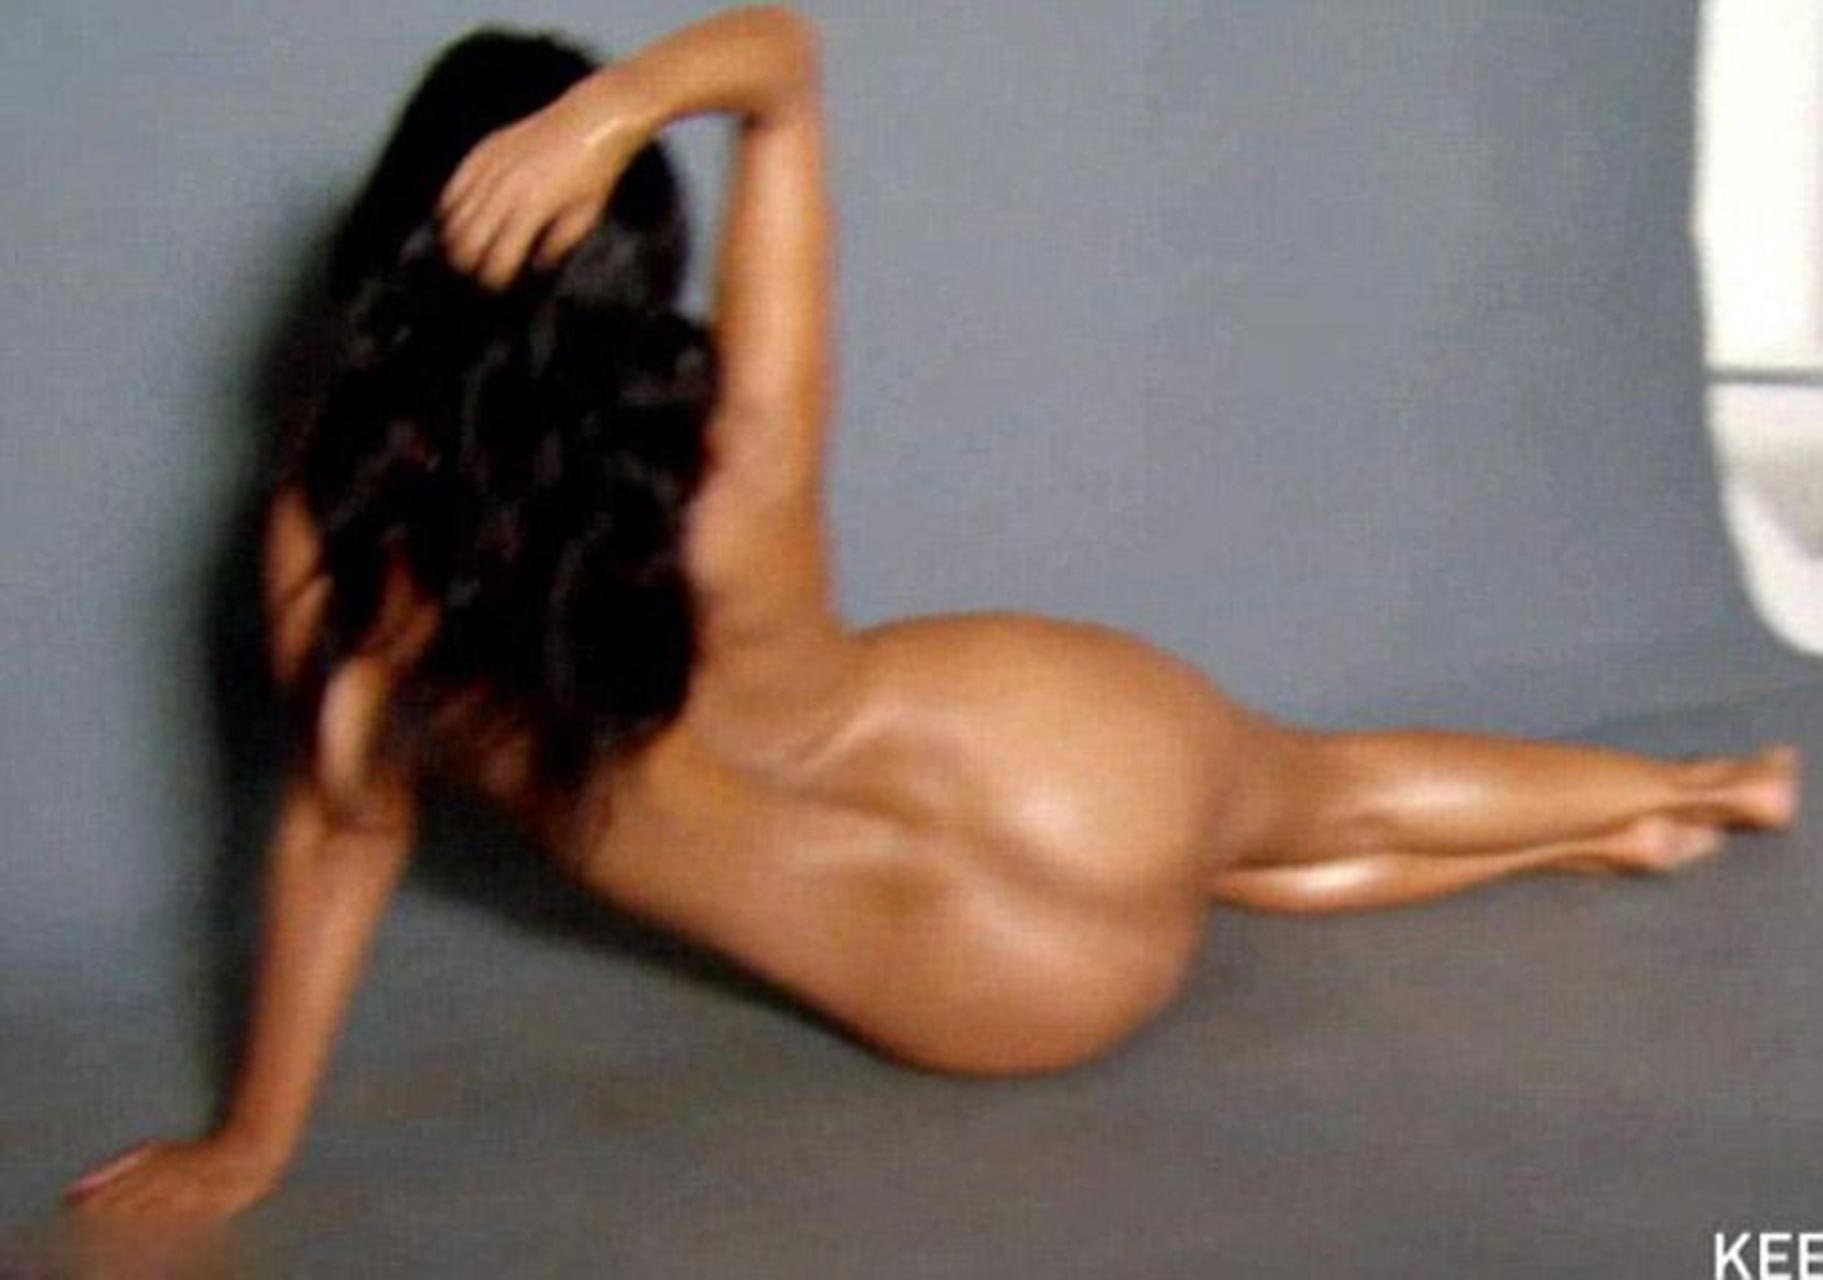 Kourtney Kardashian Naked Photo Shoooting For Gq Scandal Planet